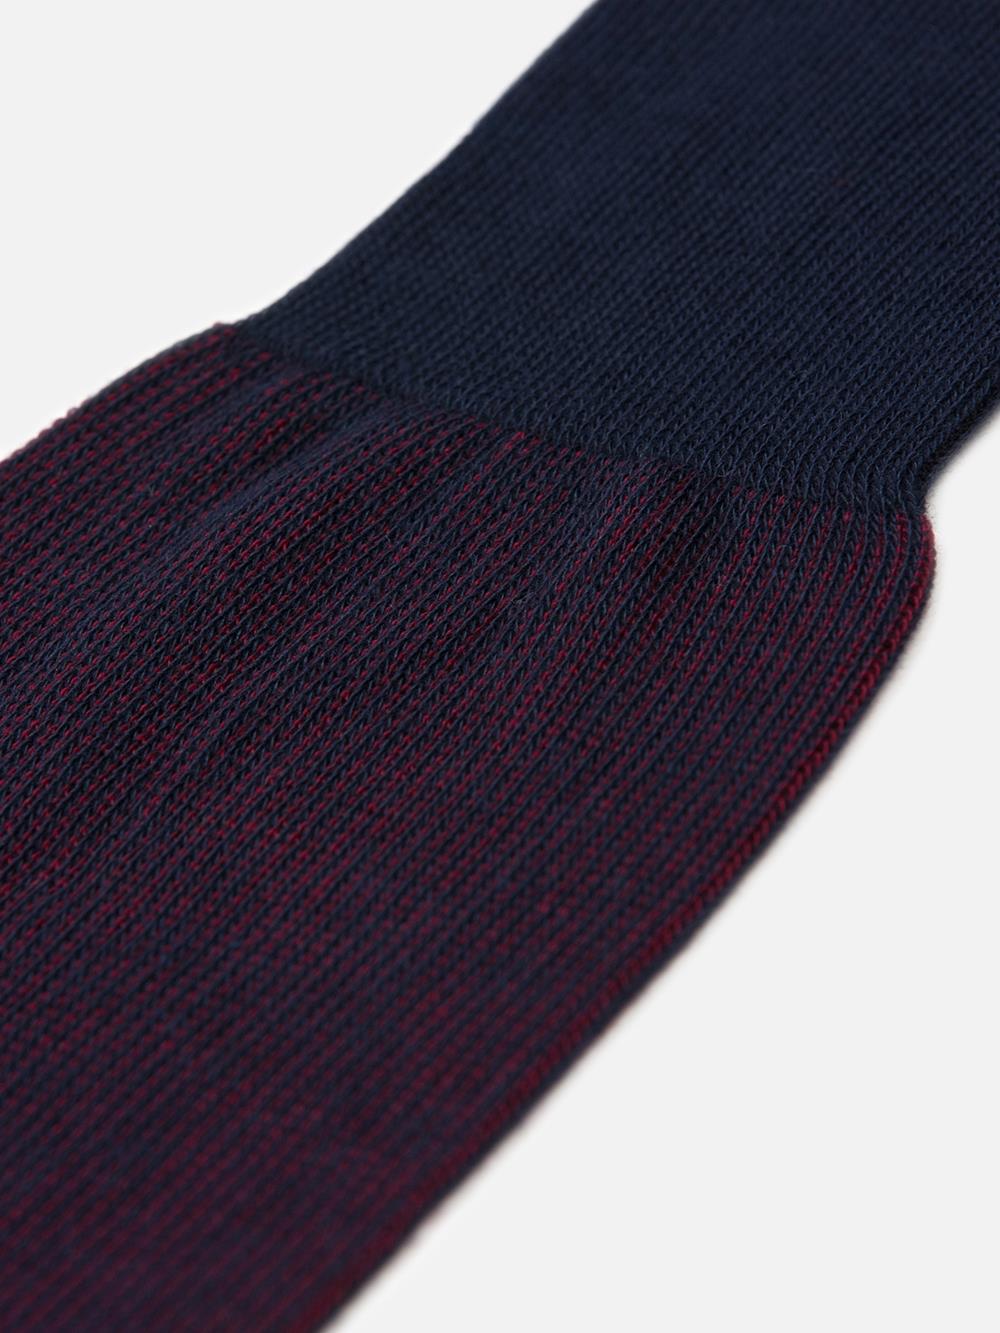 Ben socks with burgundy micro pattern